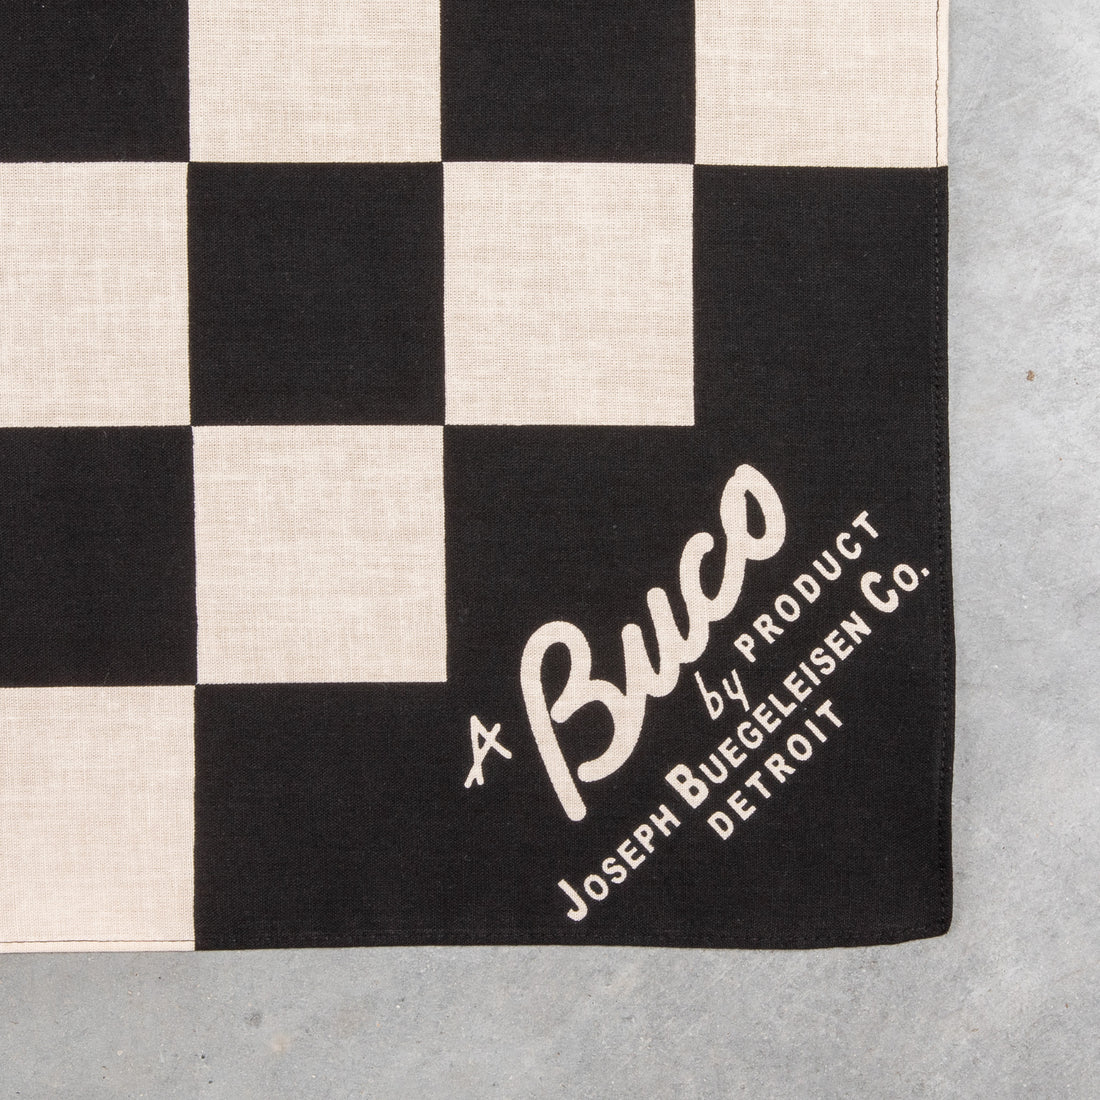 Buco Rider's Scarf / Checkered